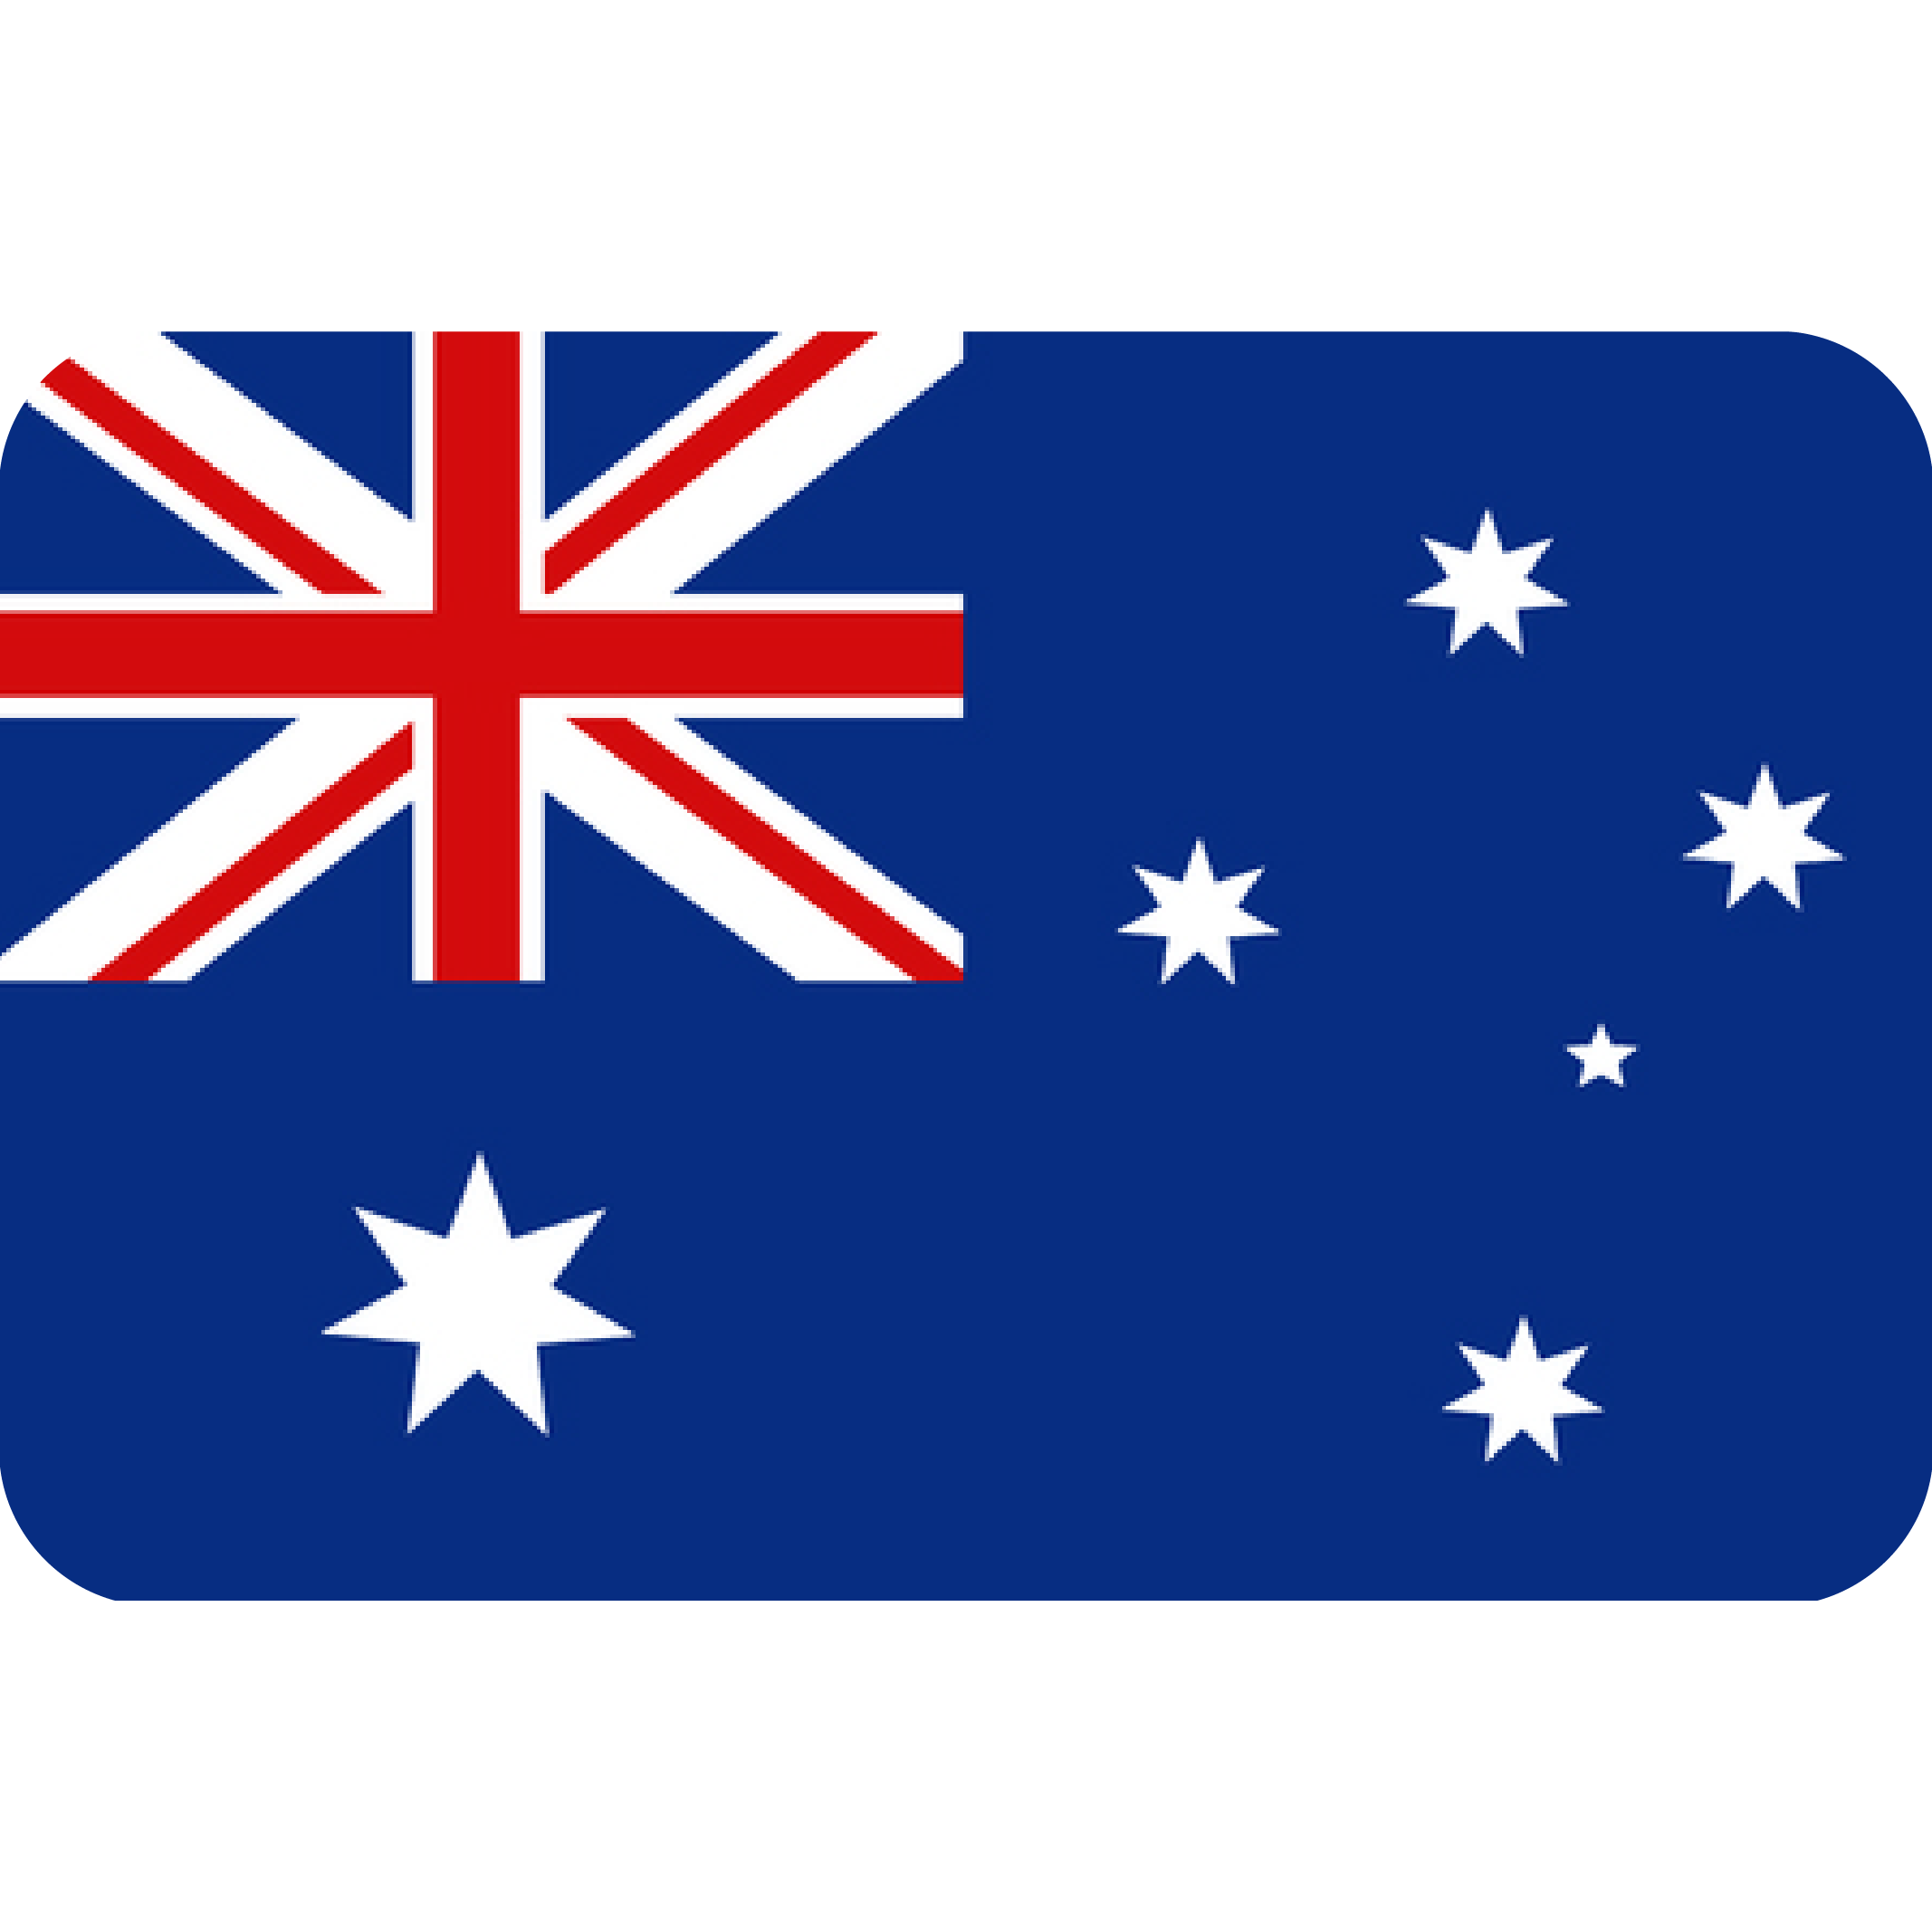 Australia (AU$)